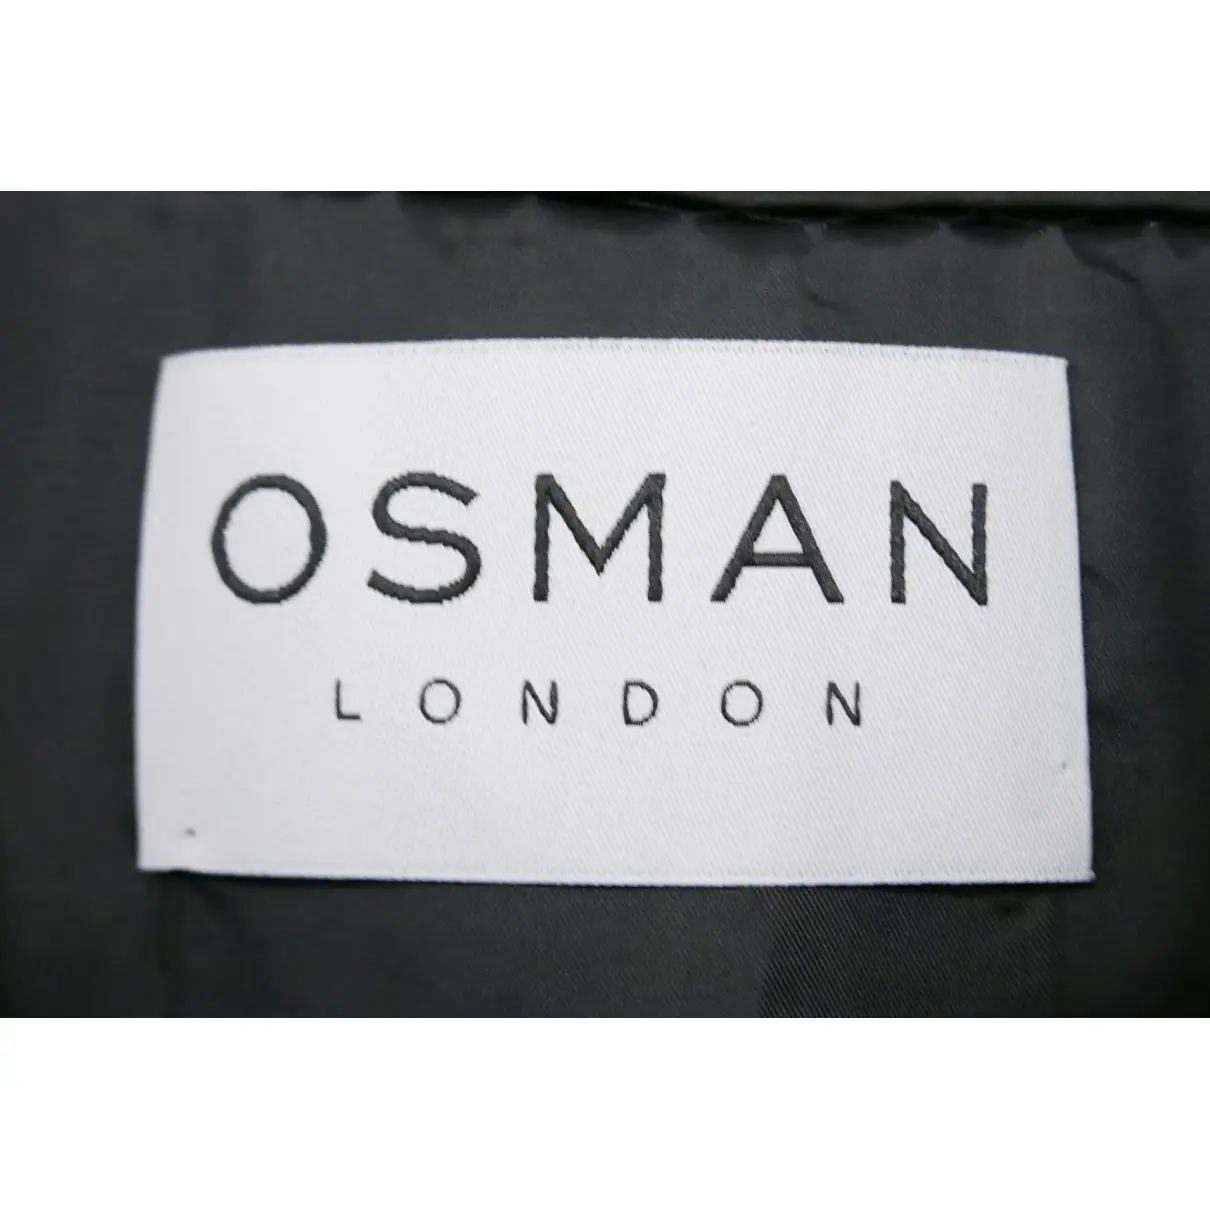 Cape Osman London